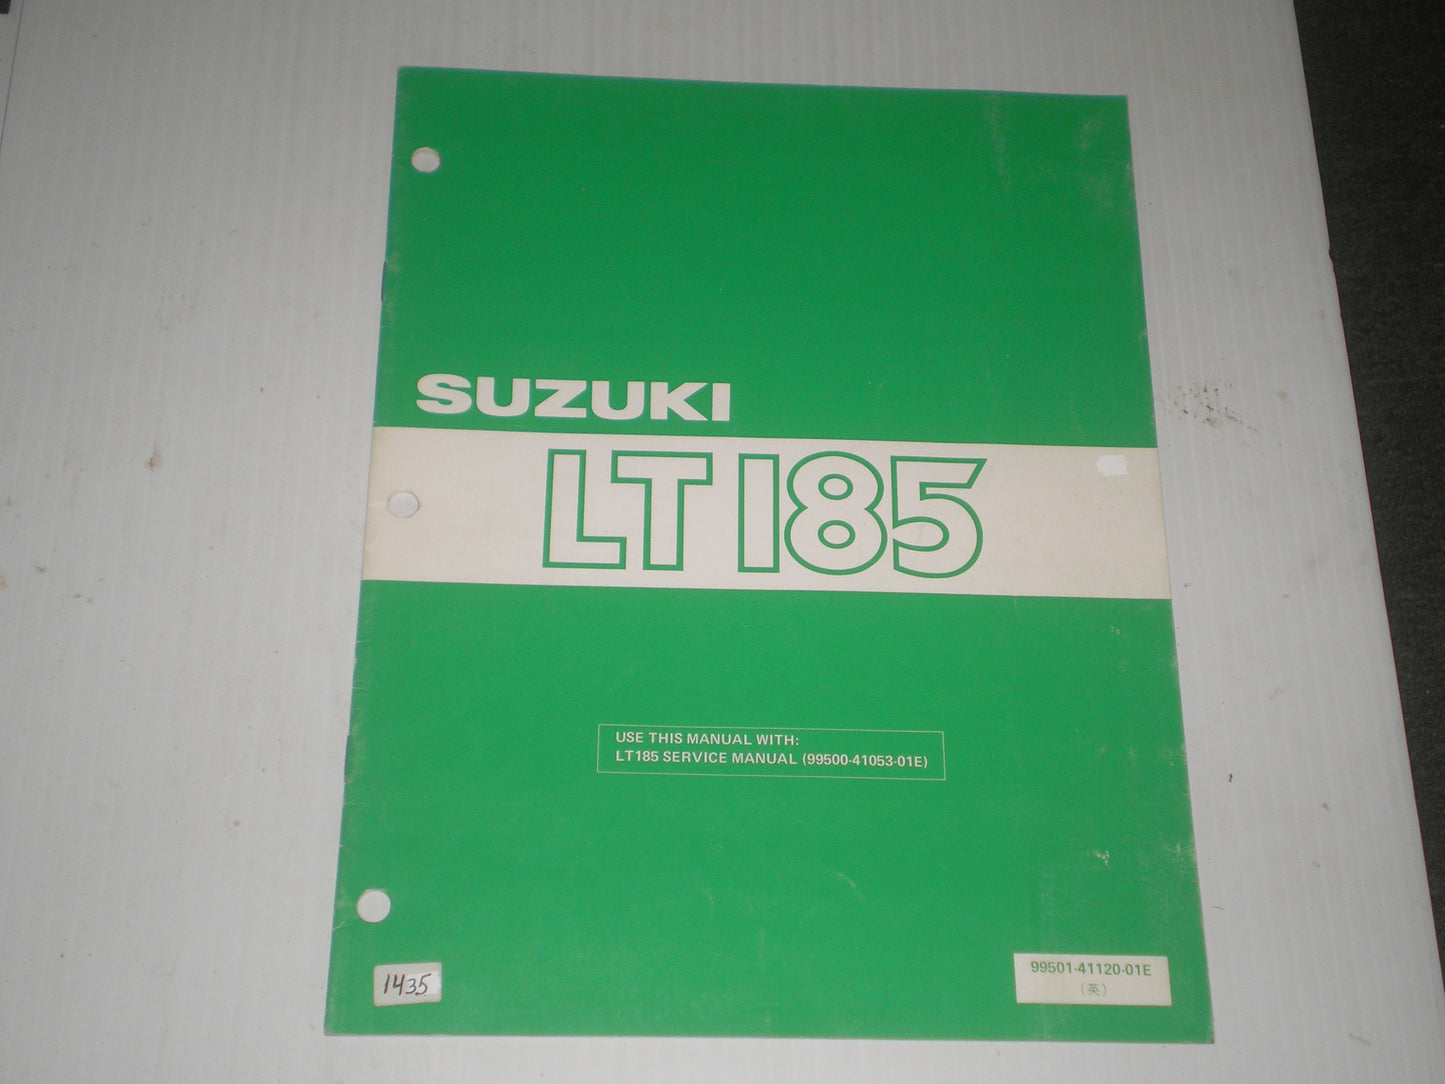 SUZUKI LT185 H 1987  Service Manual Supplement  99501-41120-01E  #1435